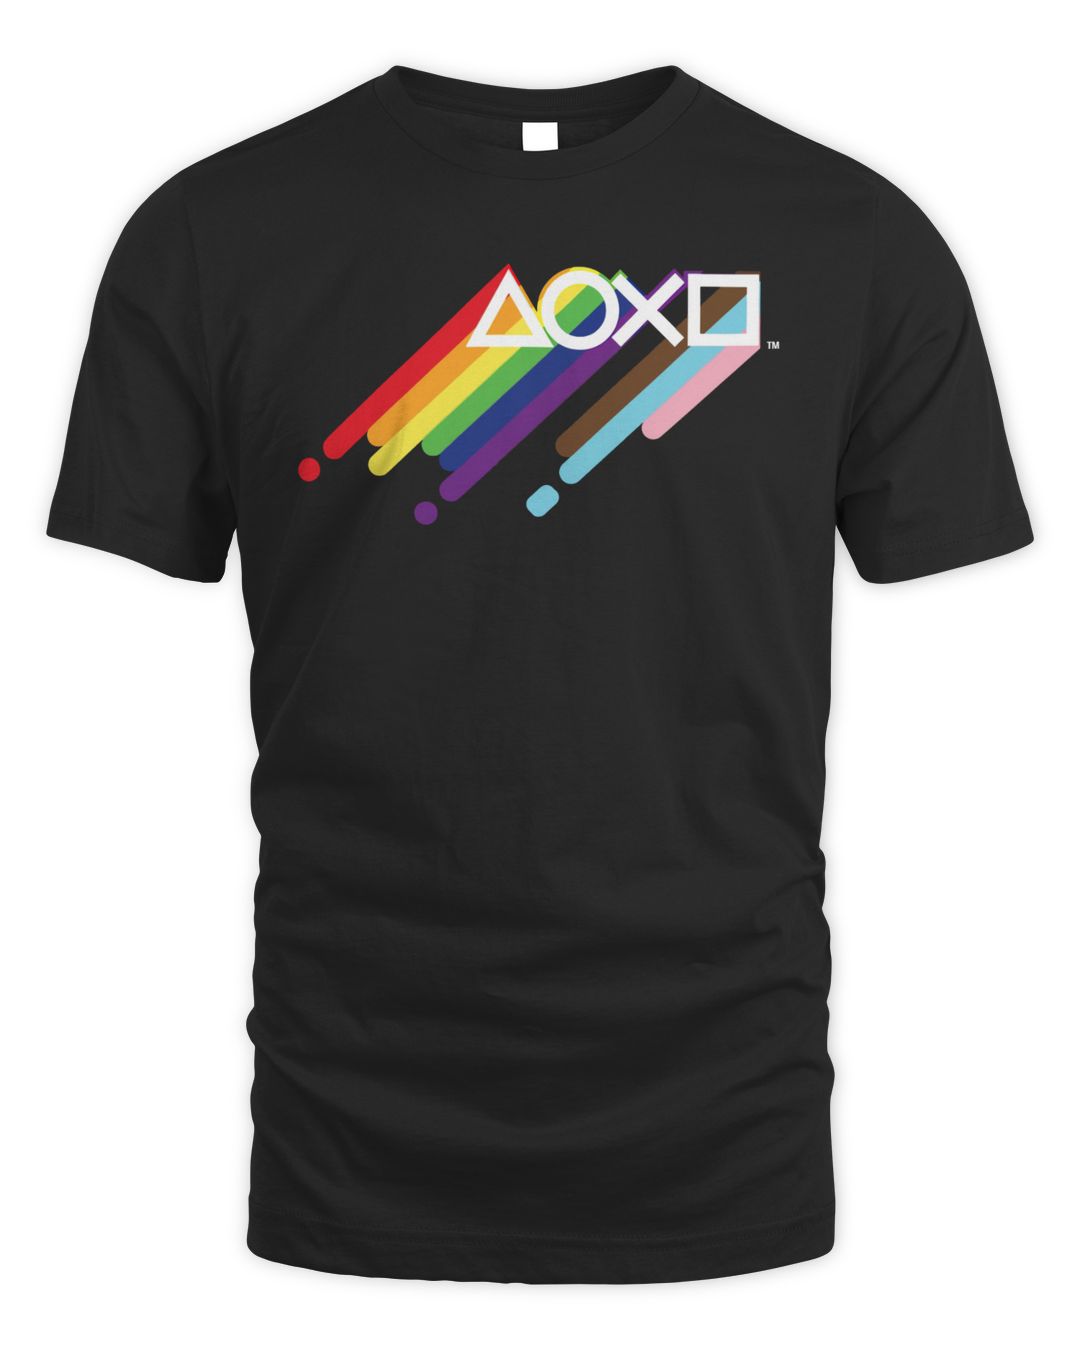 Playstation Merch Pride 2022 Shirt